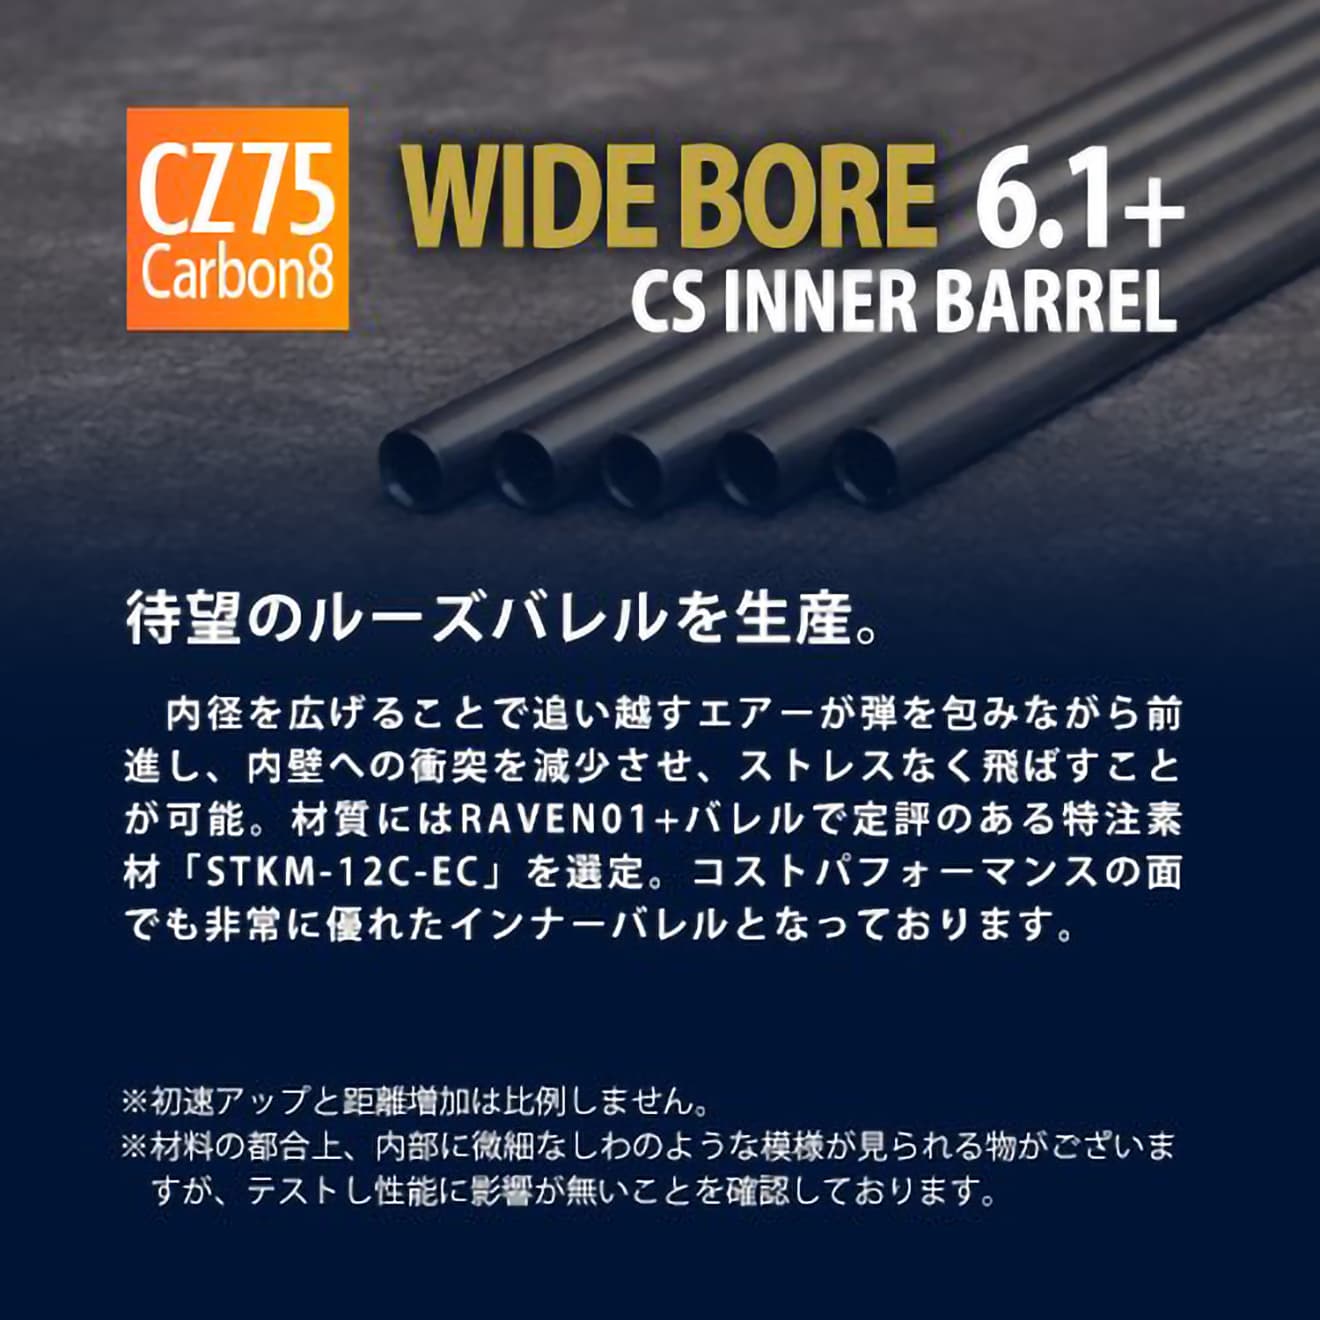 PDI WIDEBORE 6.1+ Carbon8 CZ75/M45 精密 ステンレスインナーバレル(6.15±0.007) [長さ：103mm / 113mm]【レターパック可】